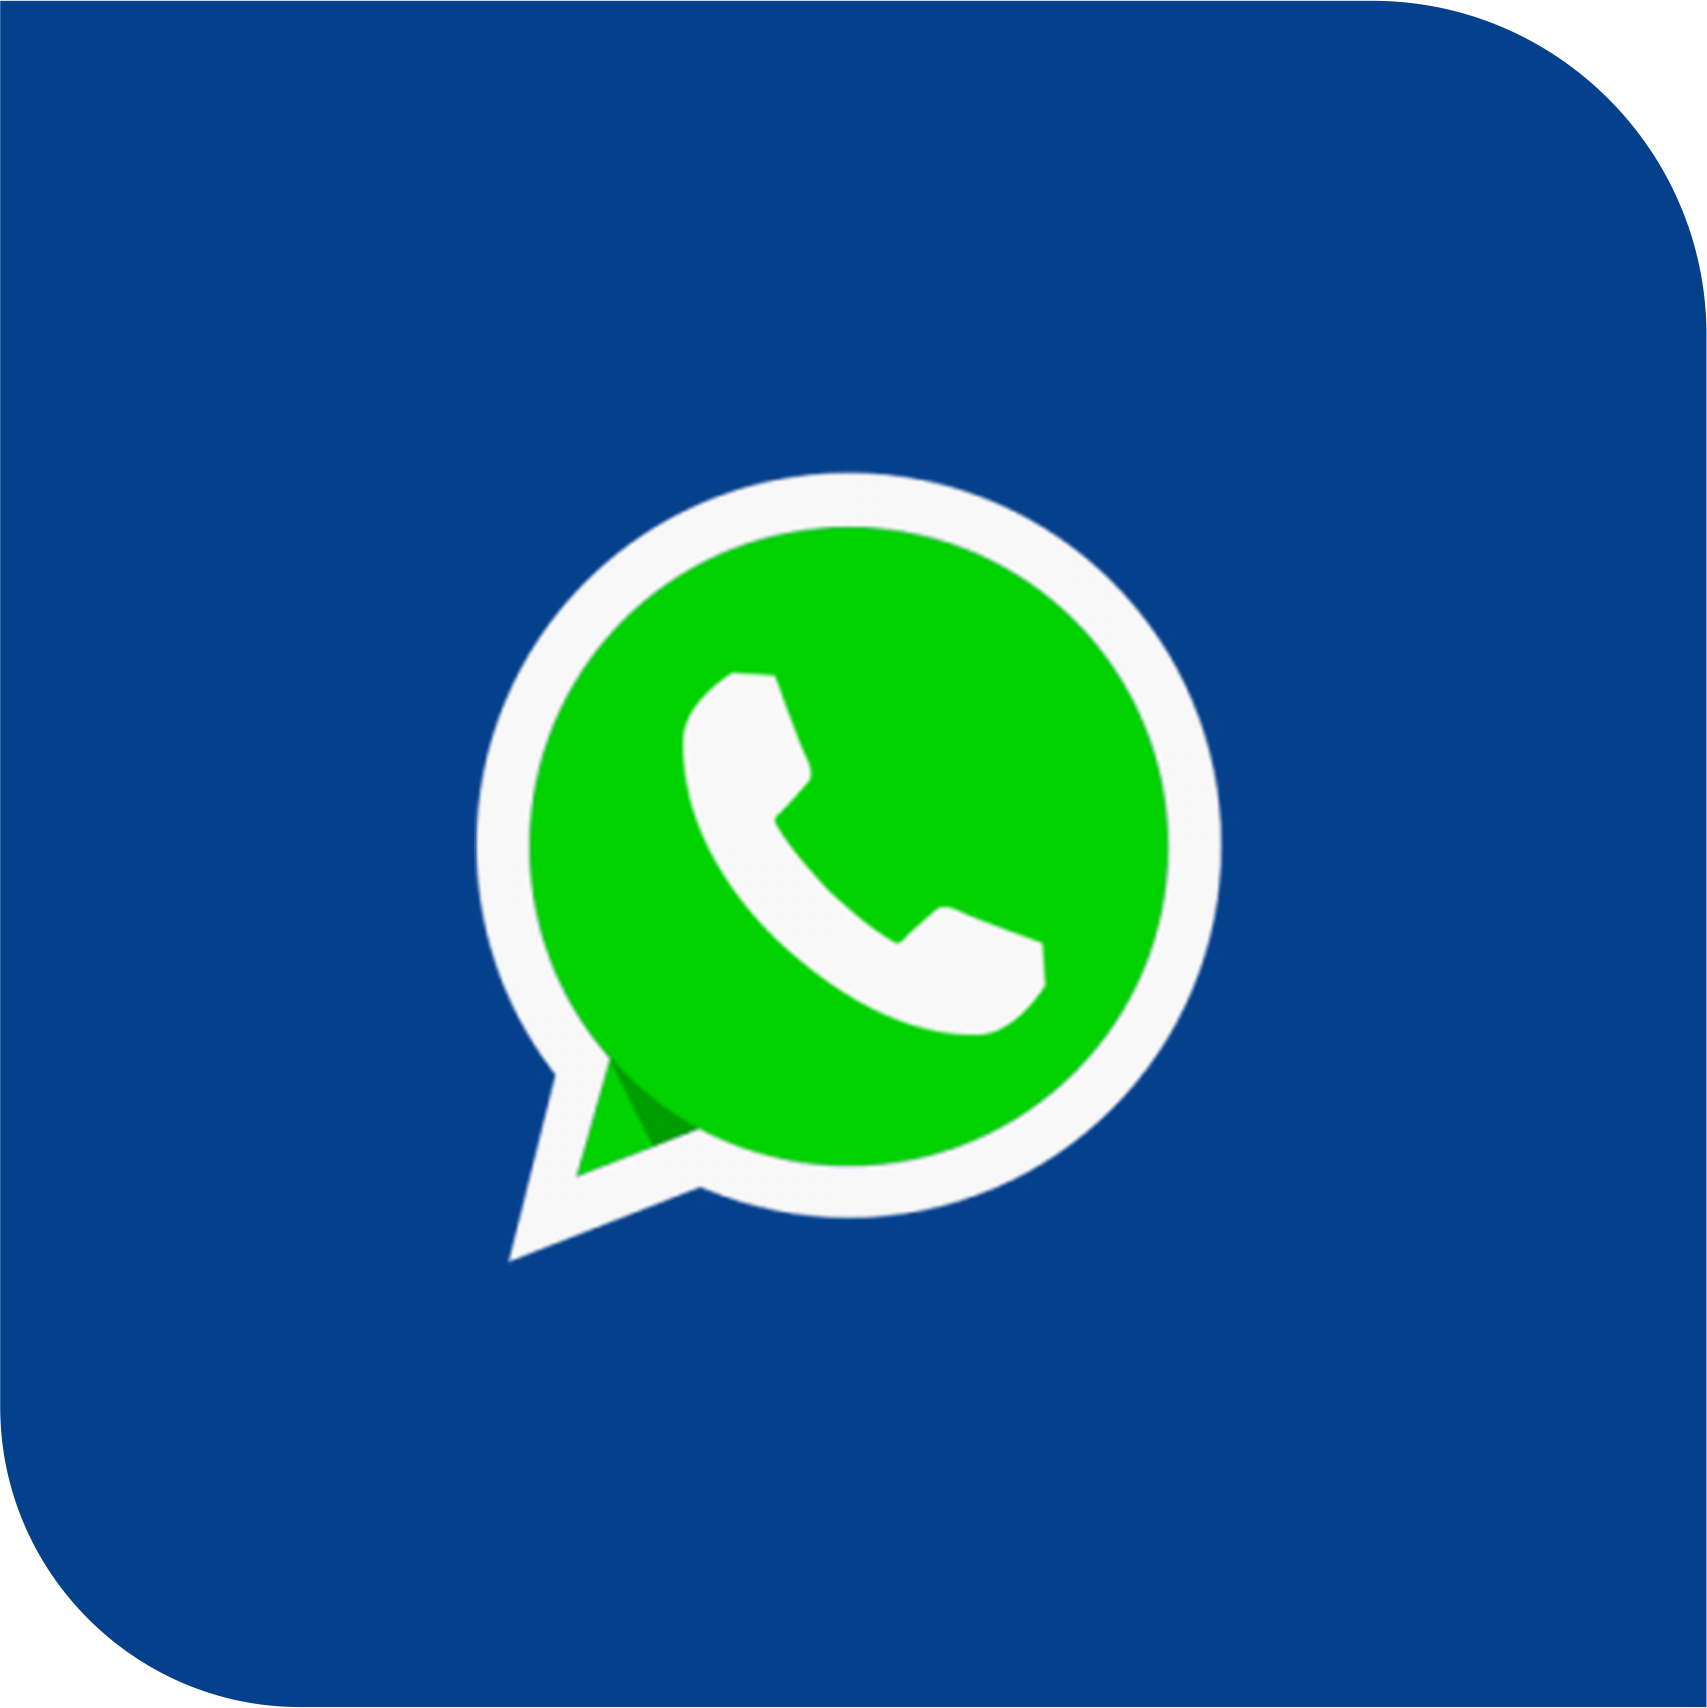 telephone answering service firstcall whatsapp virtual office uk